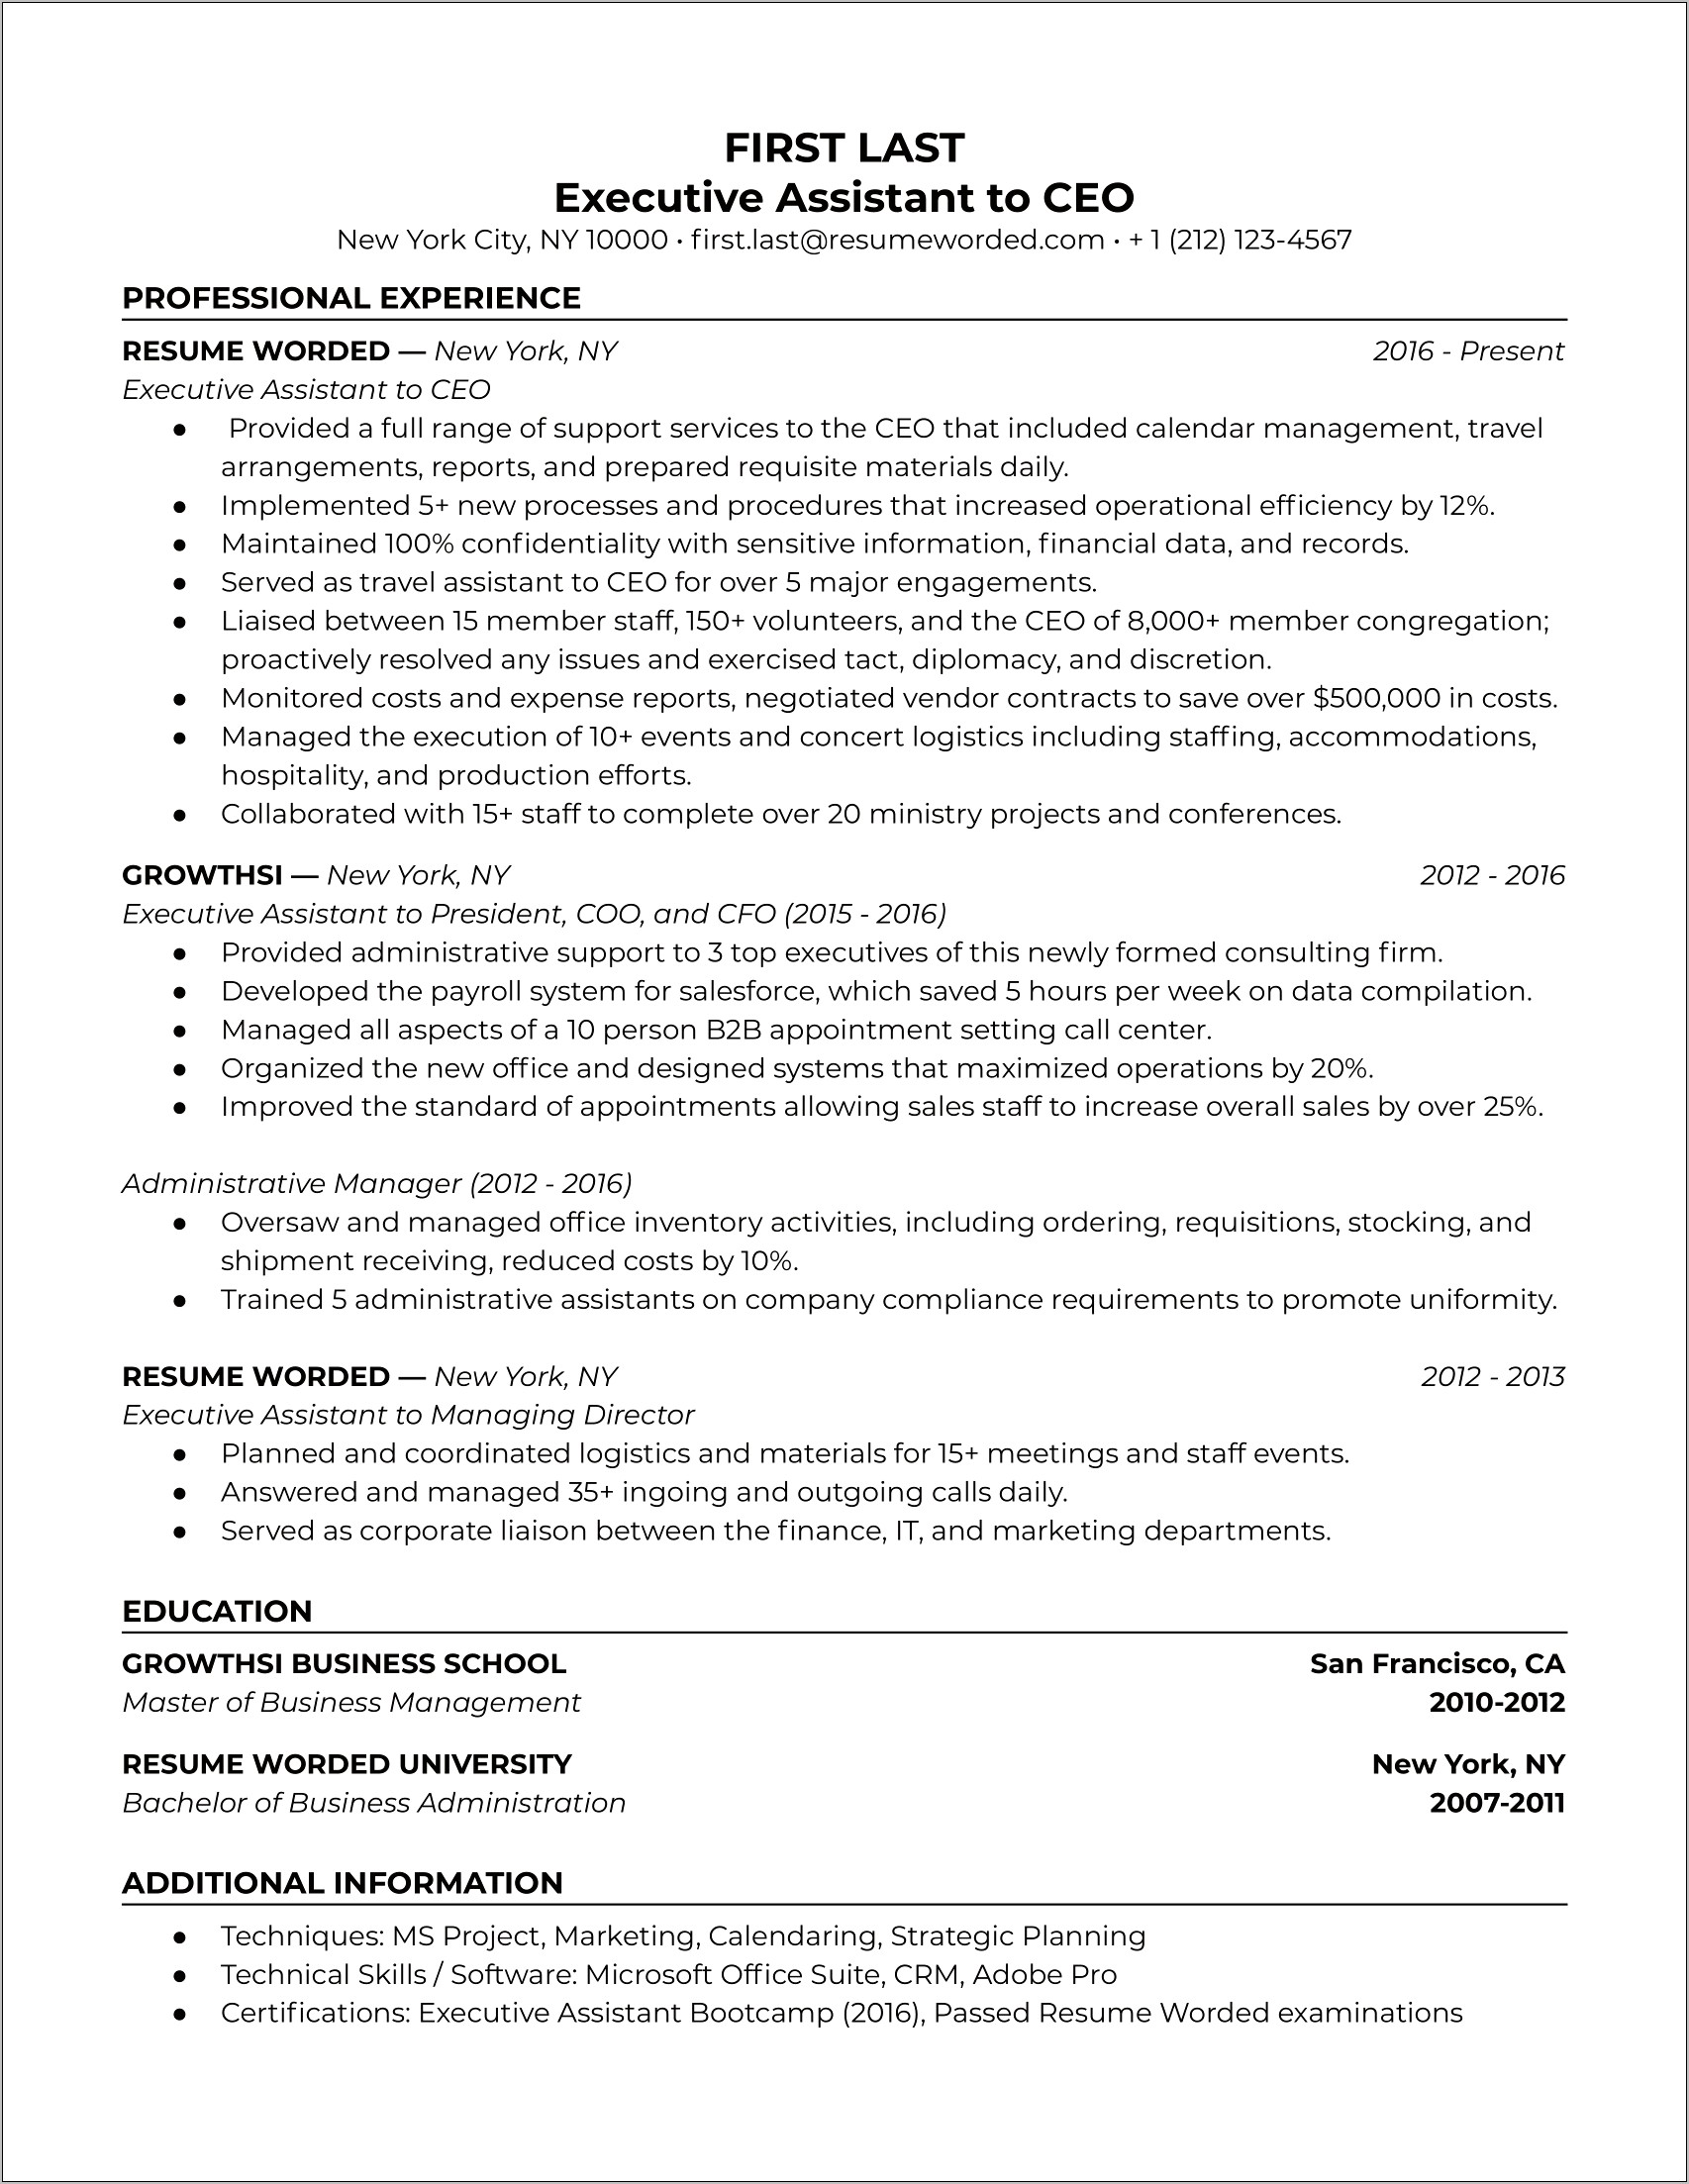 School Administrative Assistant Job Description For Resume